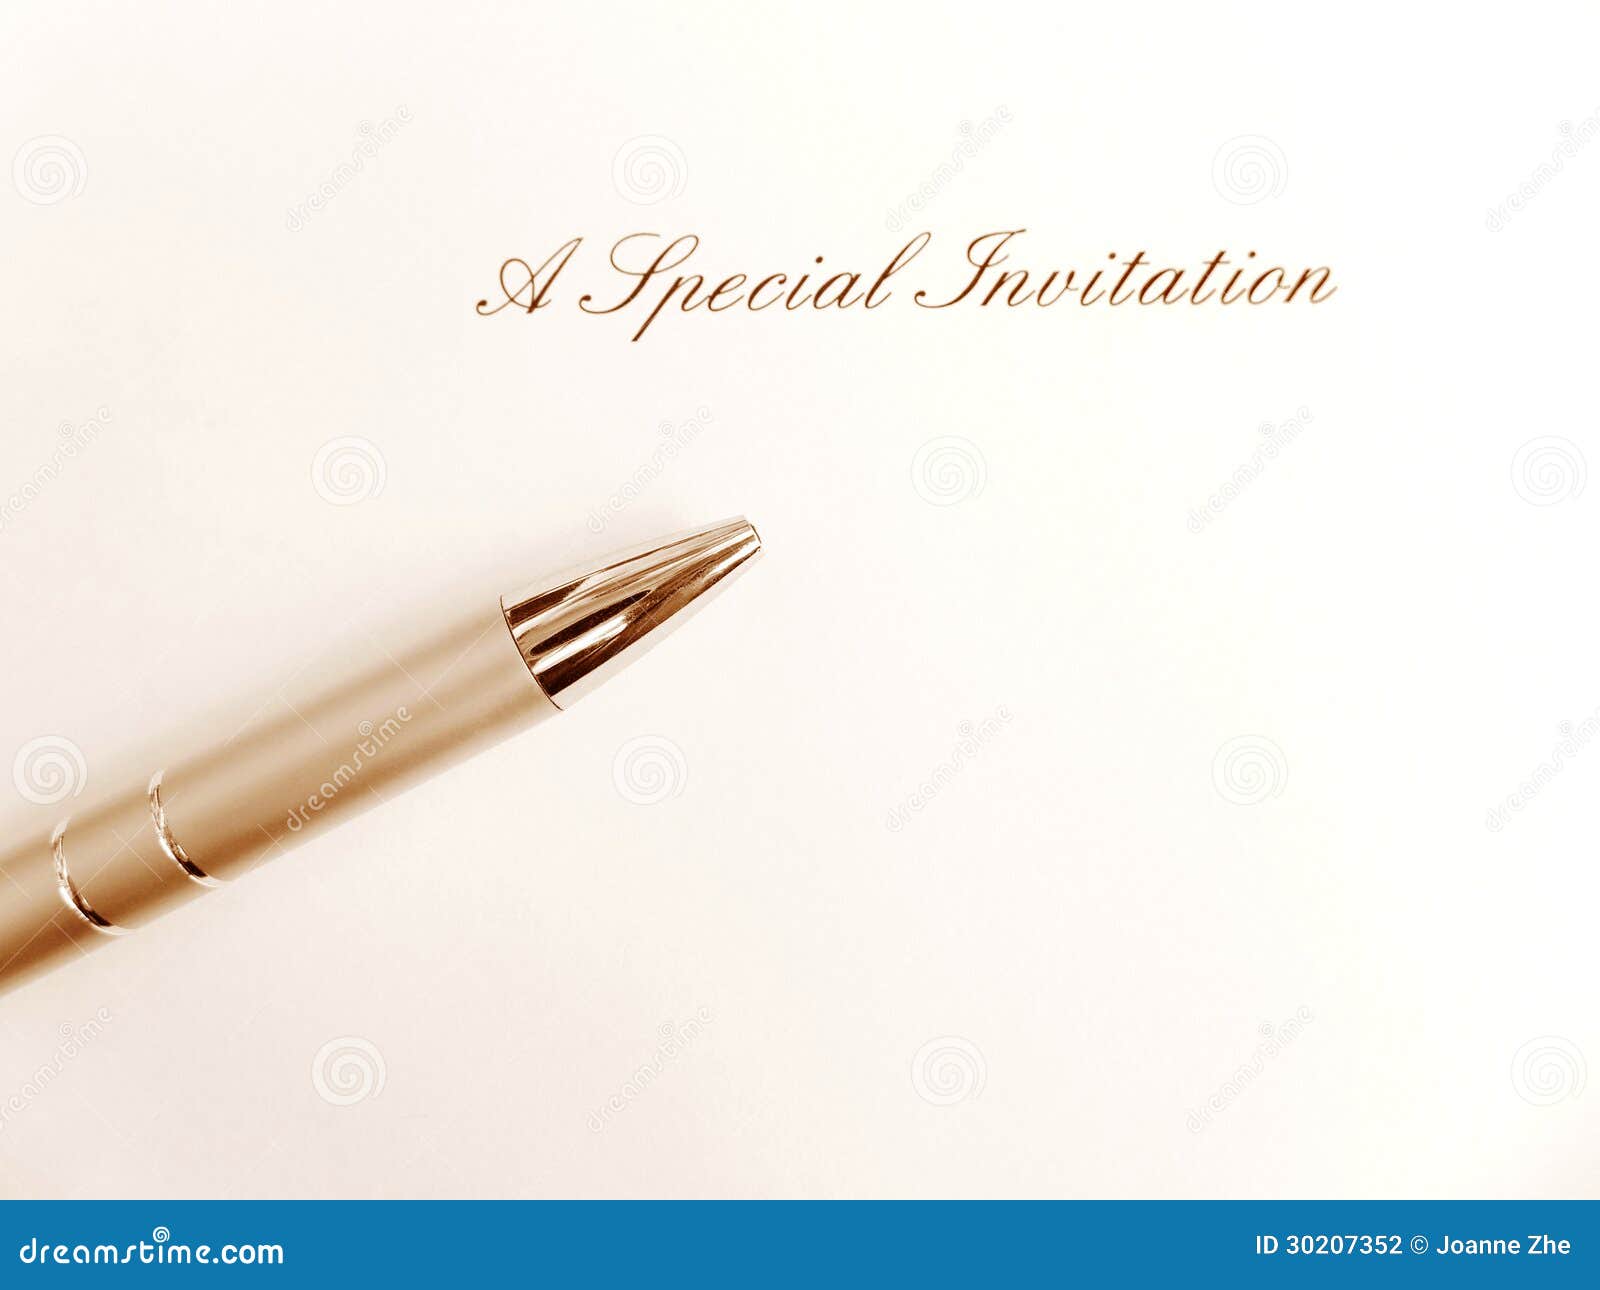 a special invitation card. you are invited.